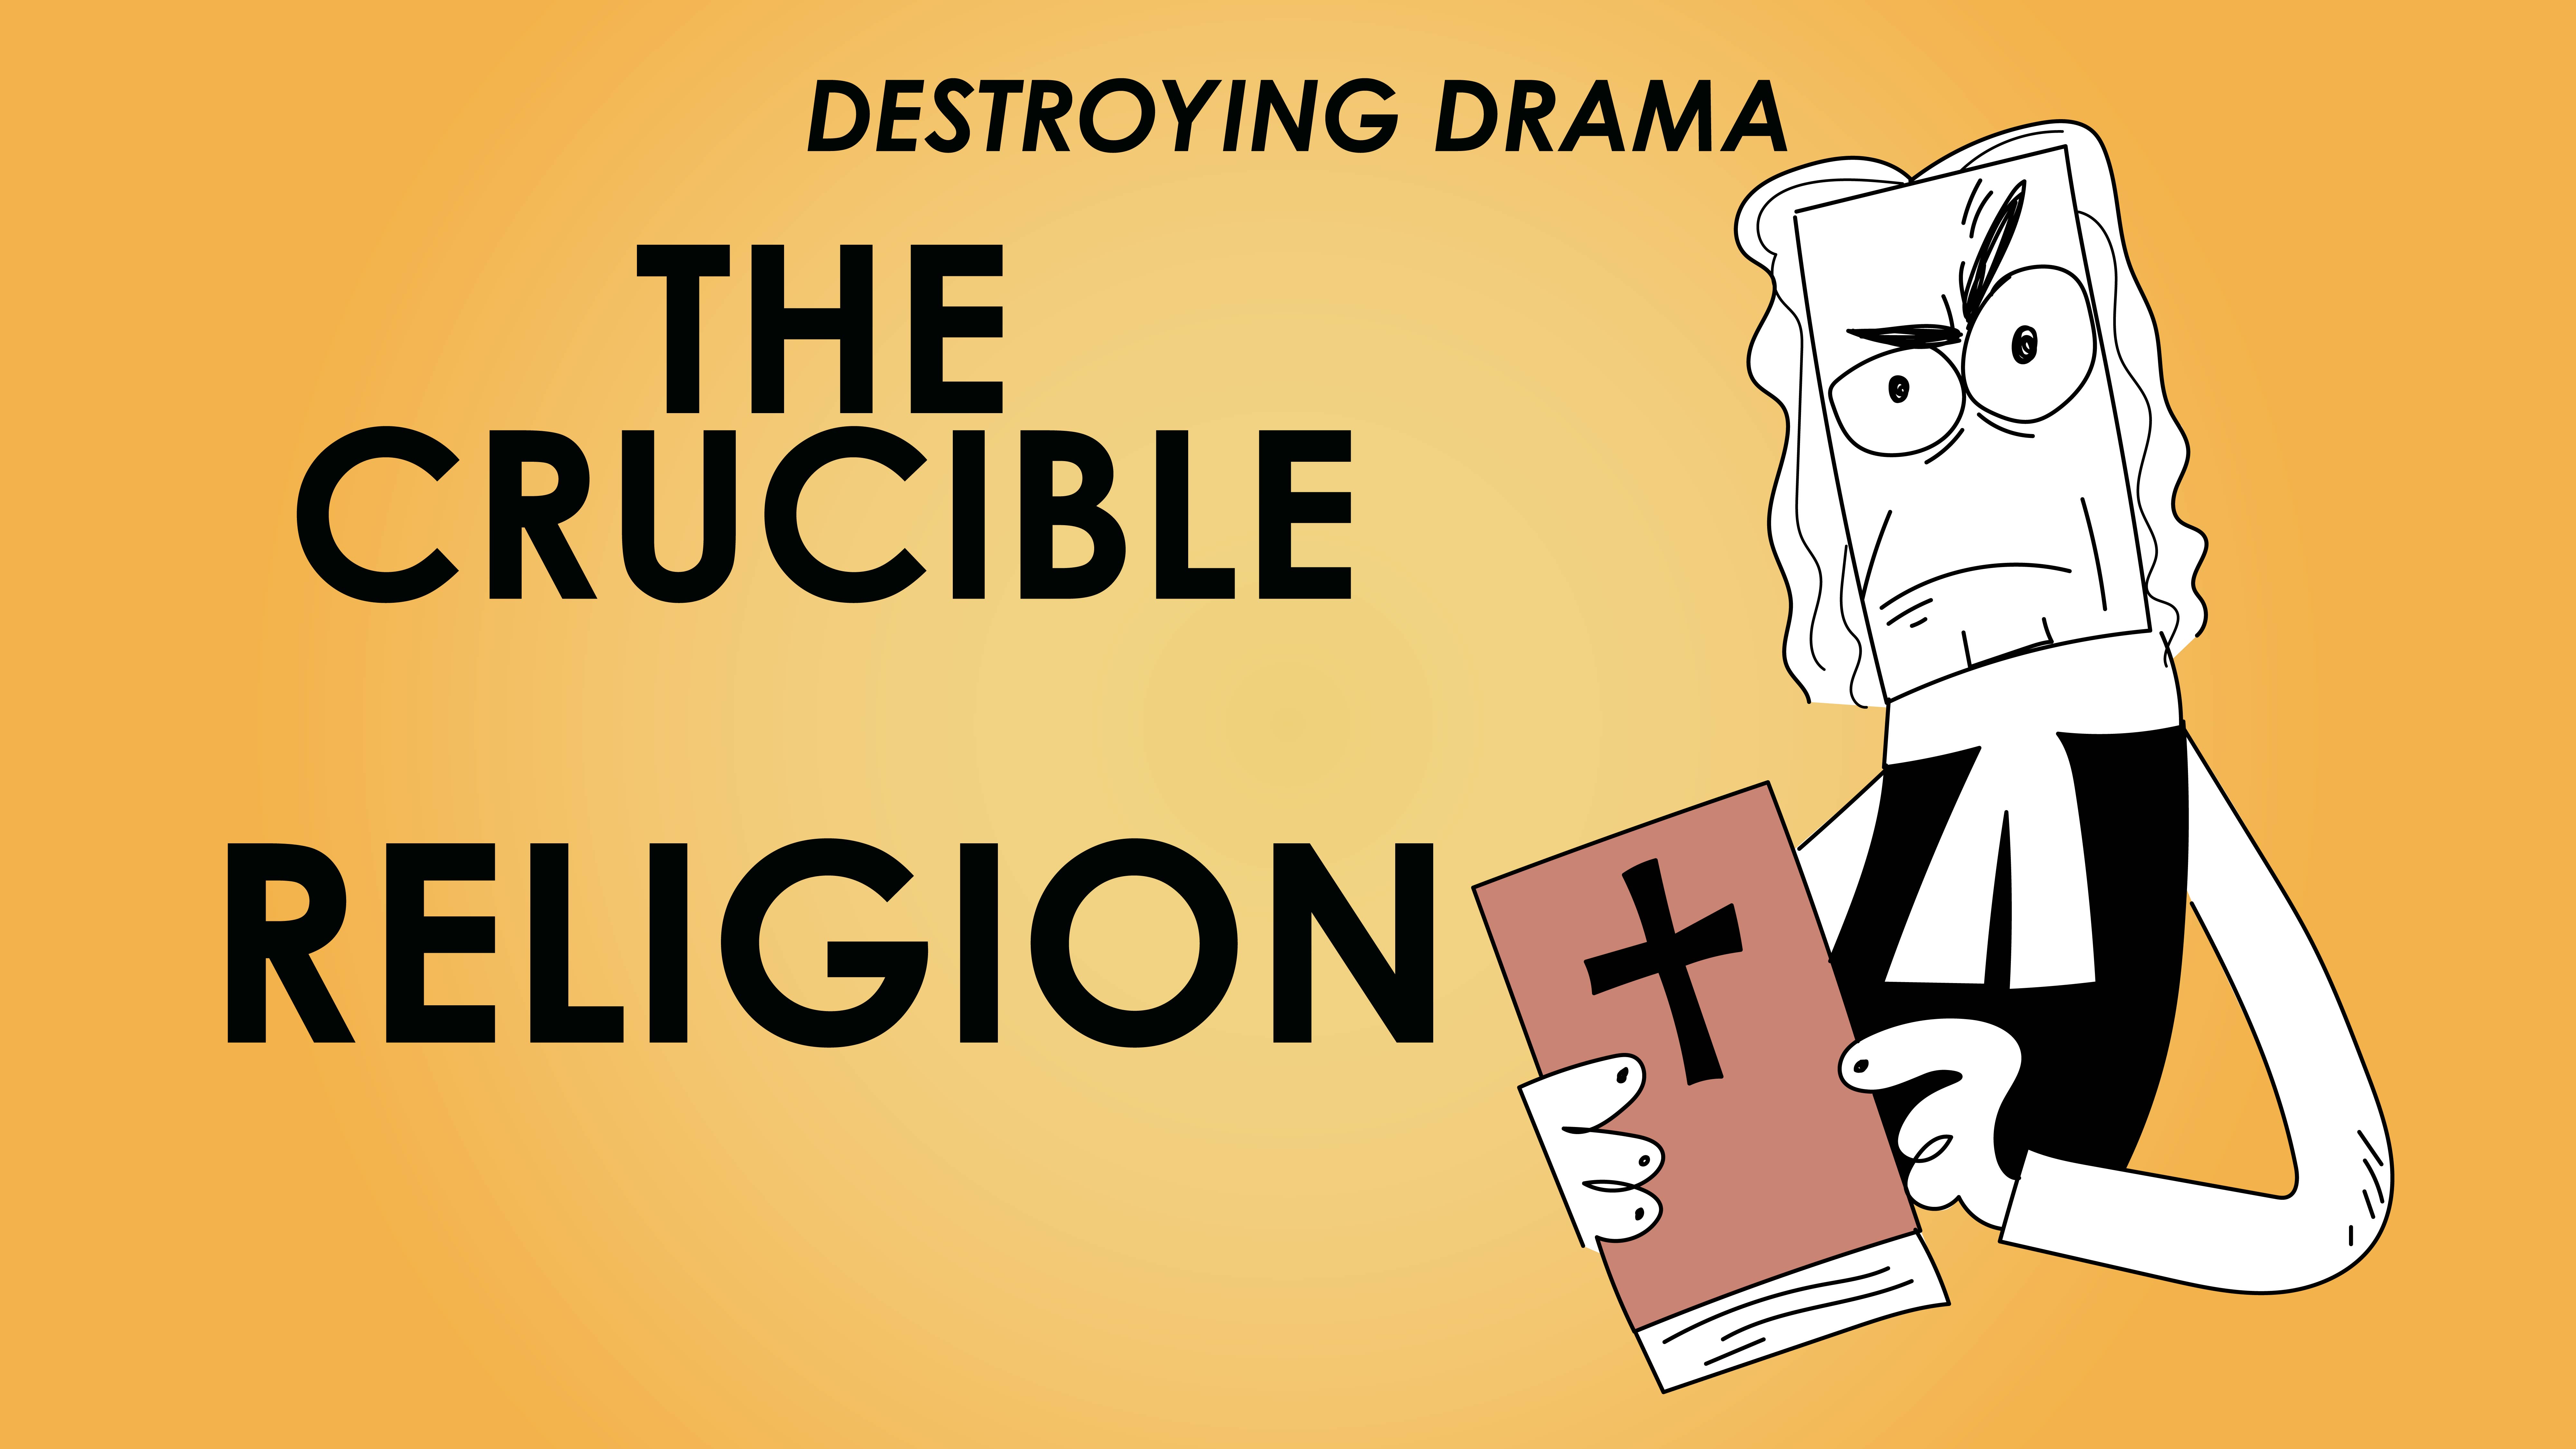 The Crucible - Arthur Miller - Theme of Religion - Destroying Drama Series